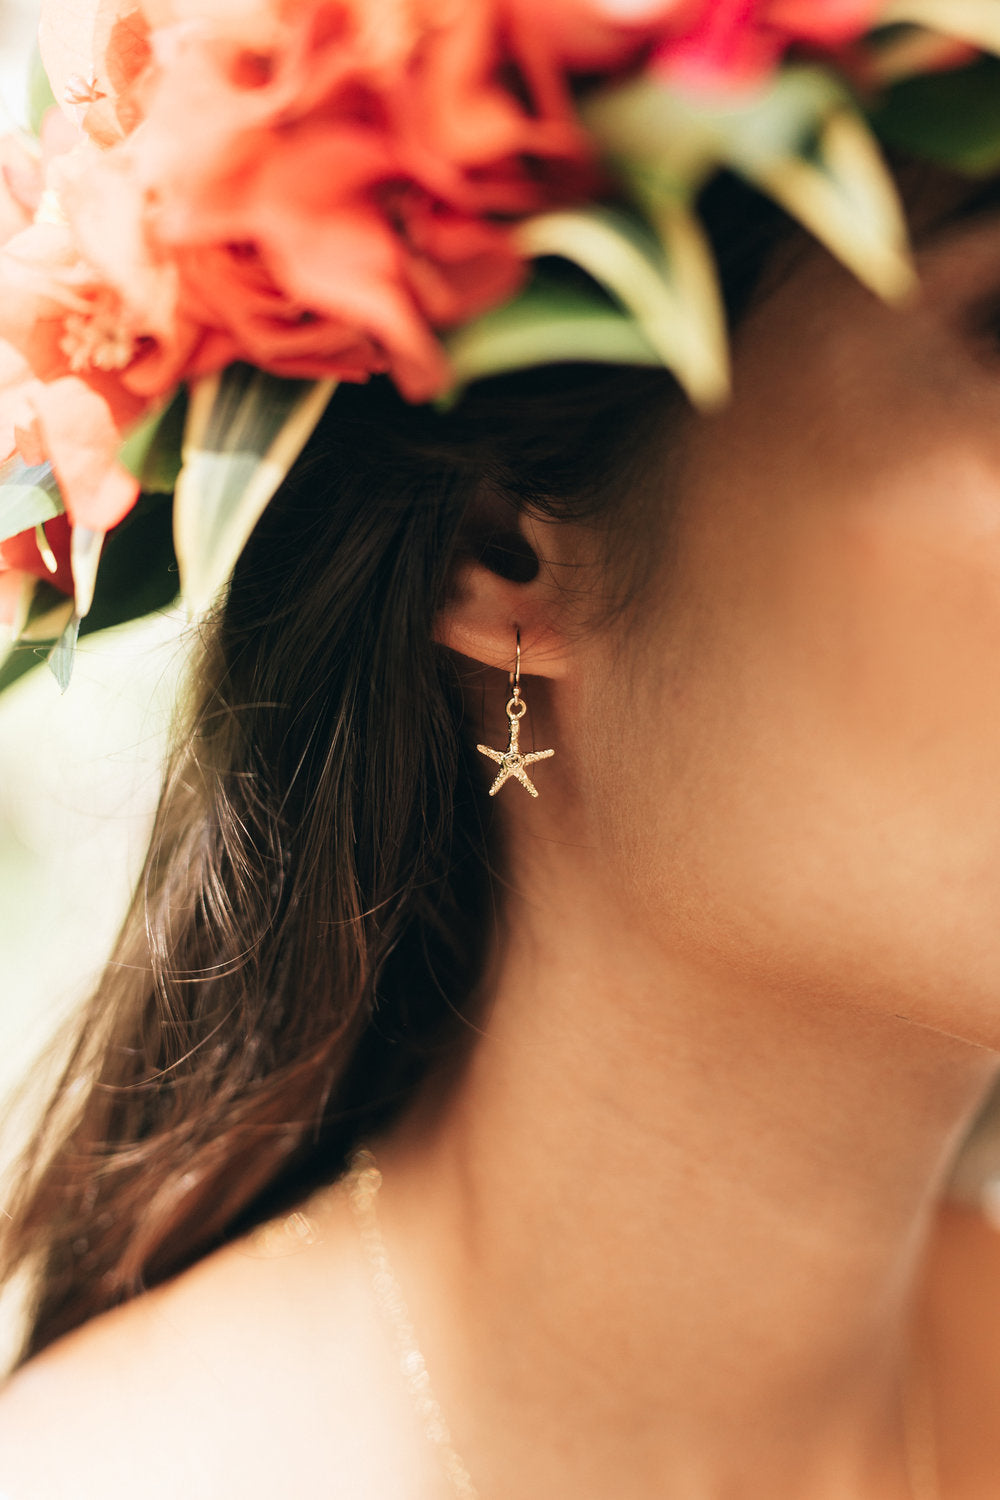 20% to Make-A-Wish Hawaii — Petite Starfish drop earrings